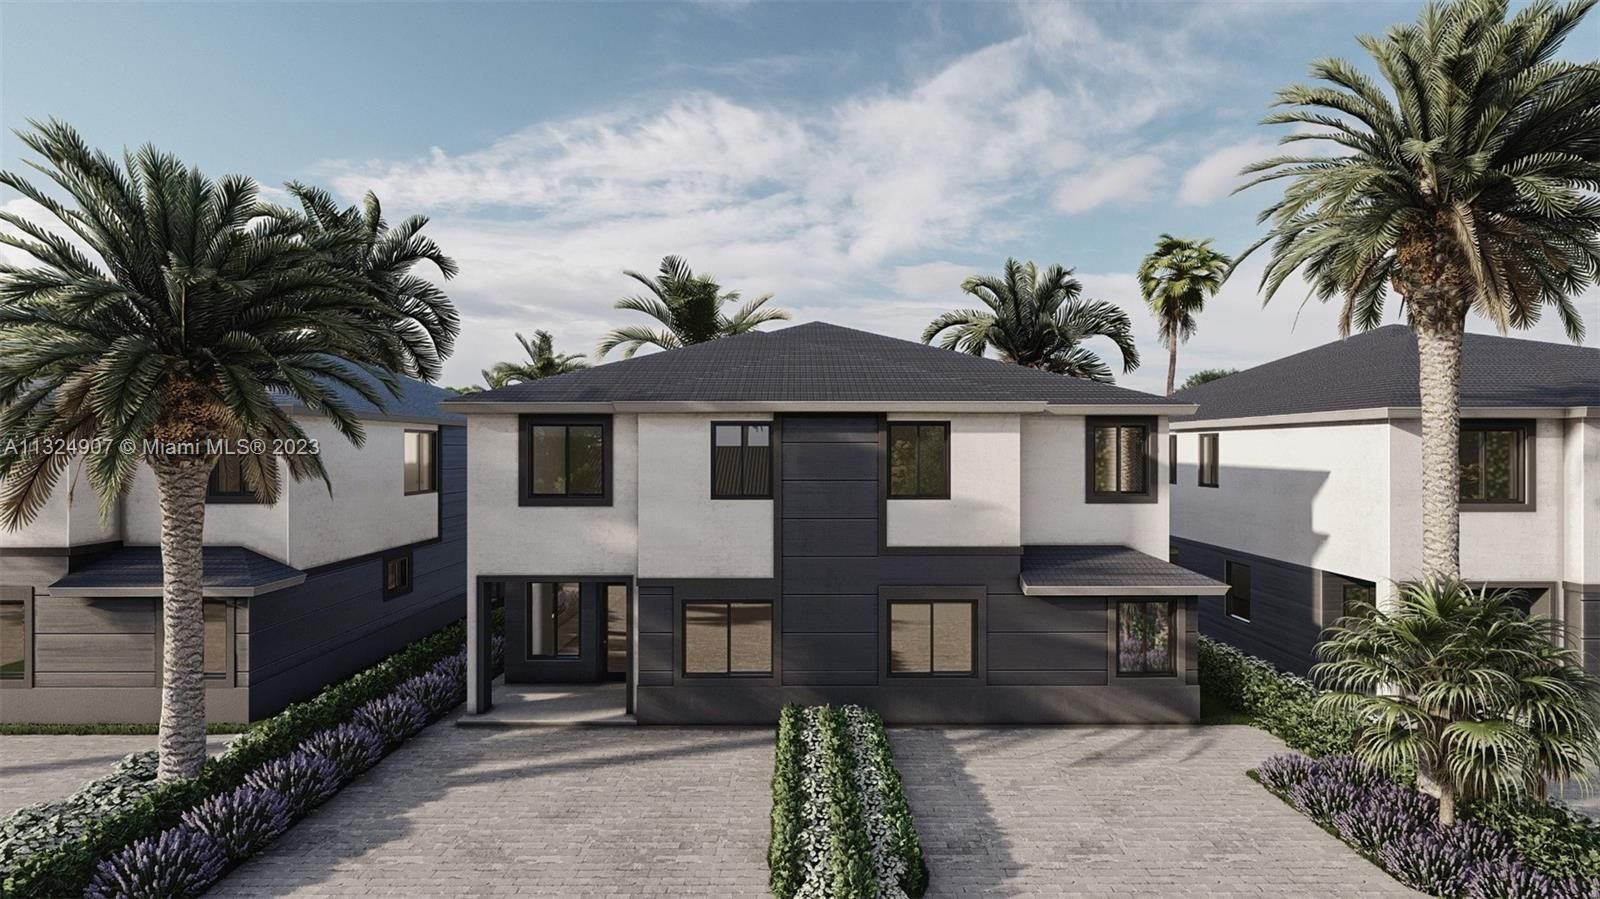 Real estate property located at 22407 125 Av A, Miami-Dade County, Miami, FL